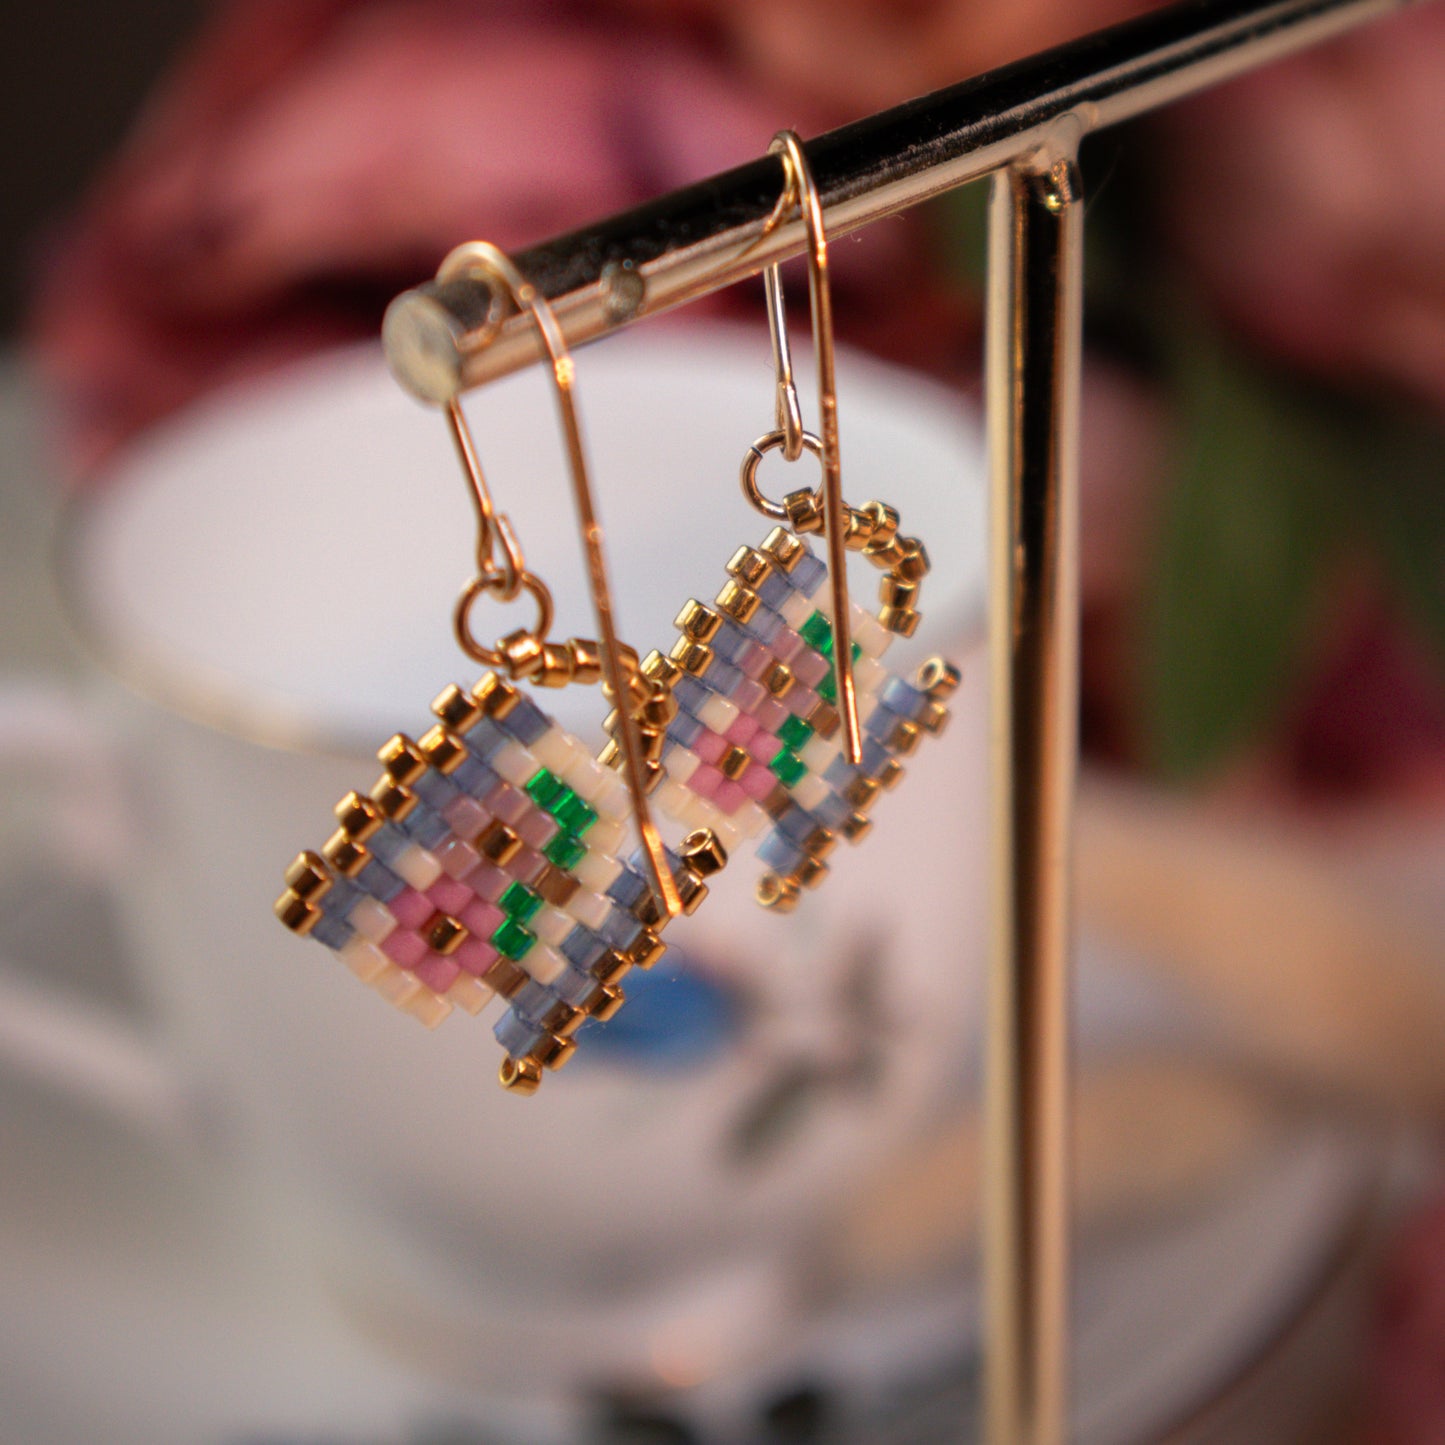 14K Gold Filled Floral Teacup Earrings